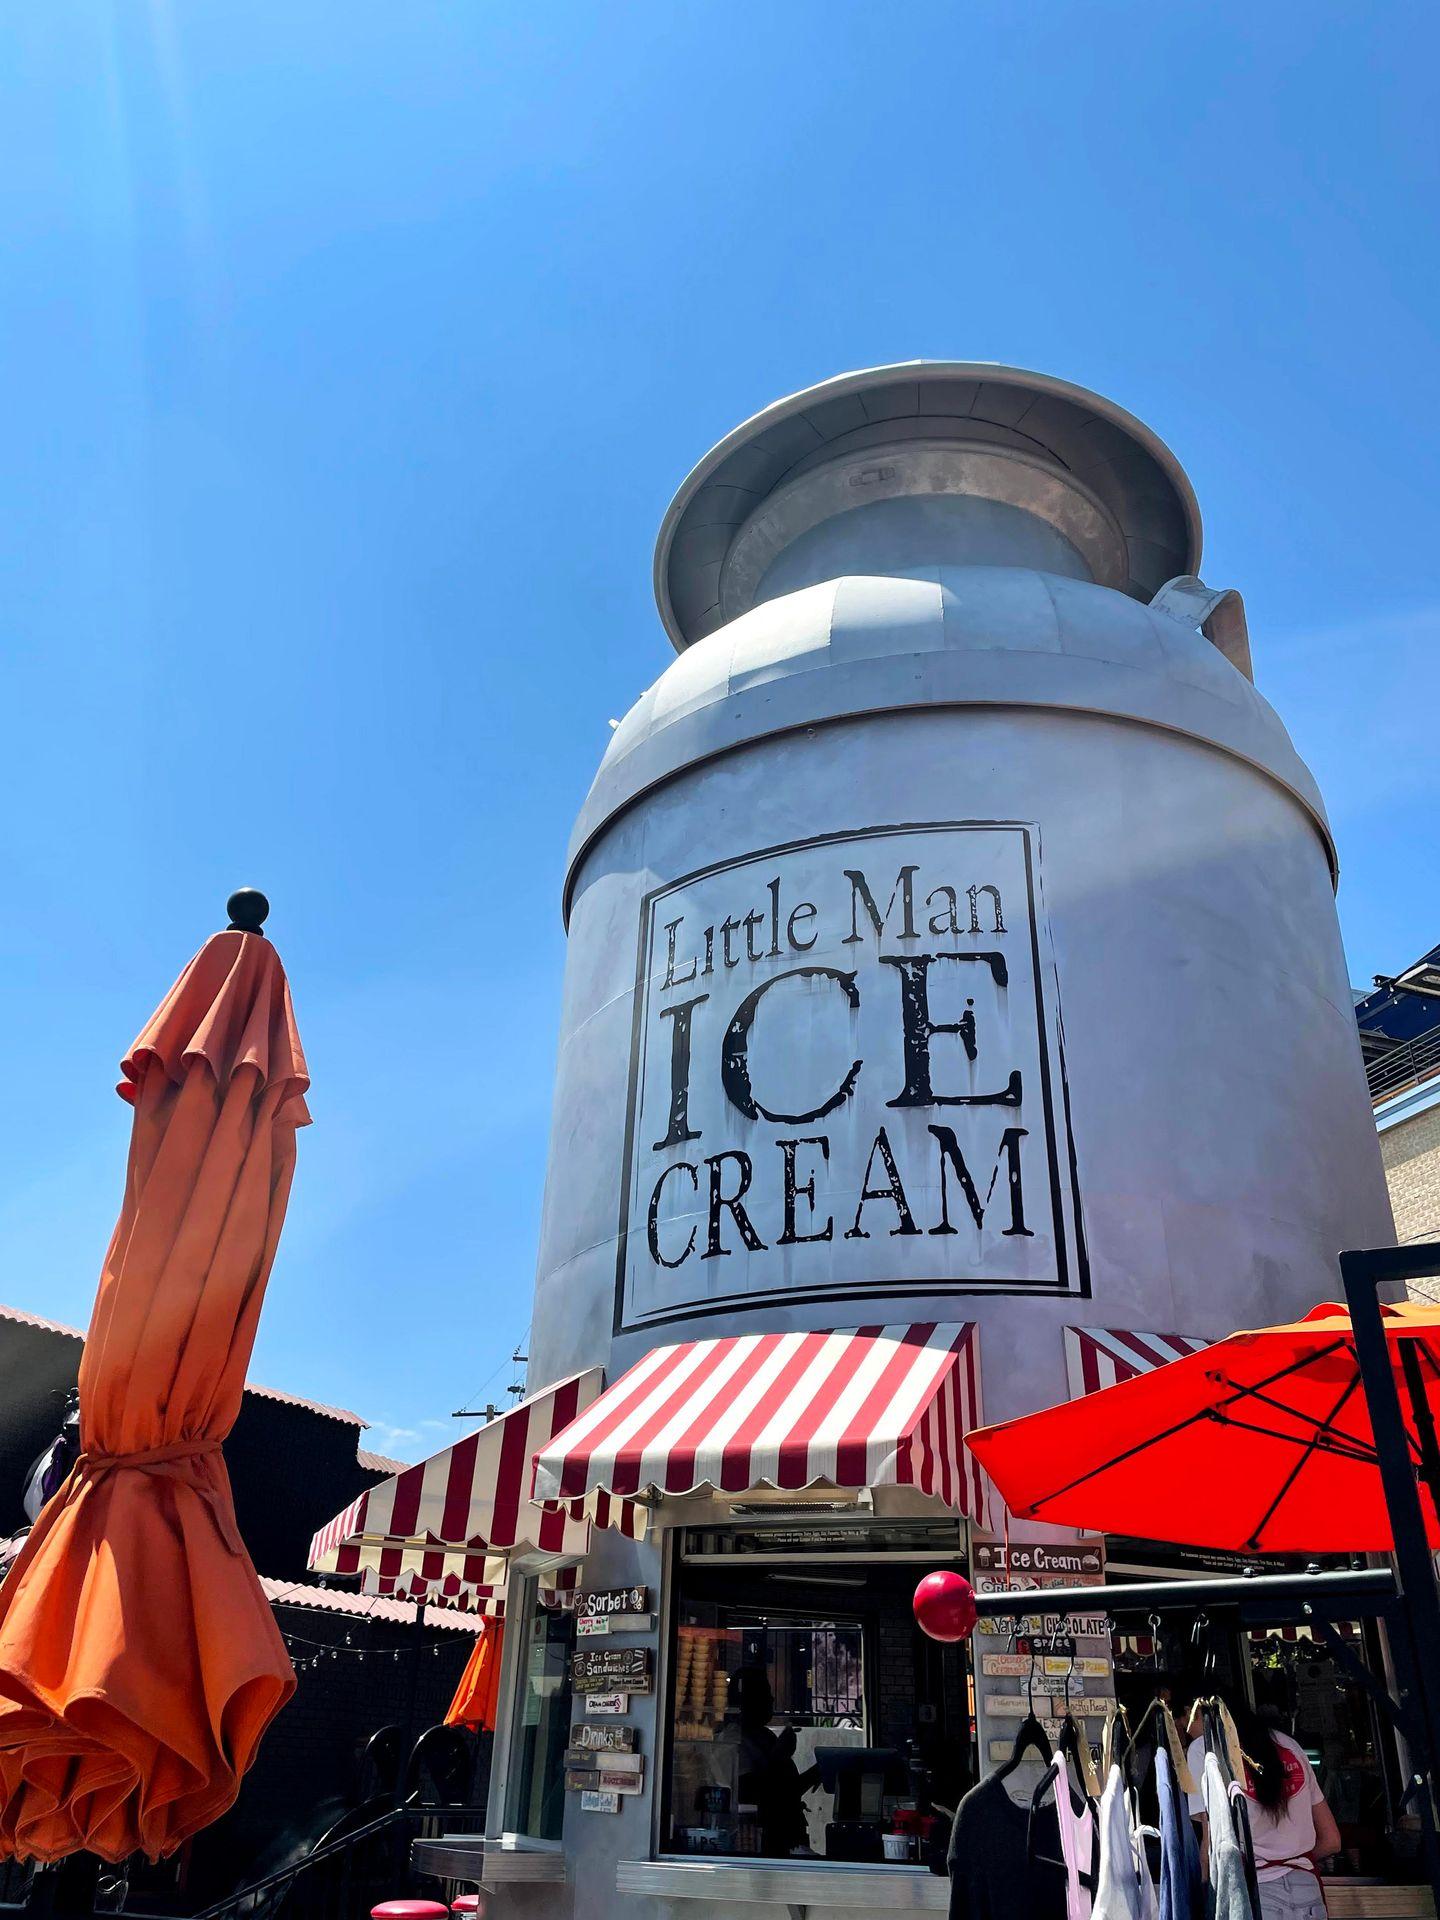 A giant milk jug labeled "Little Man Ice Cream"